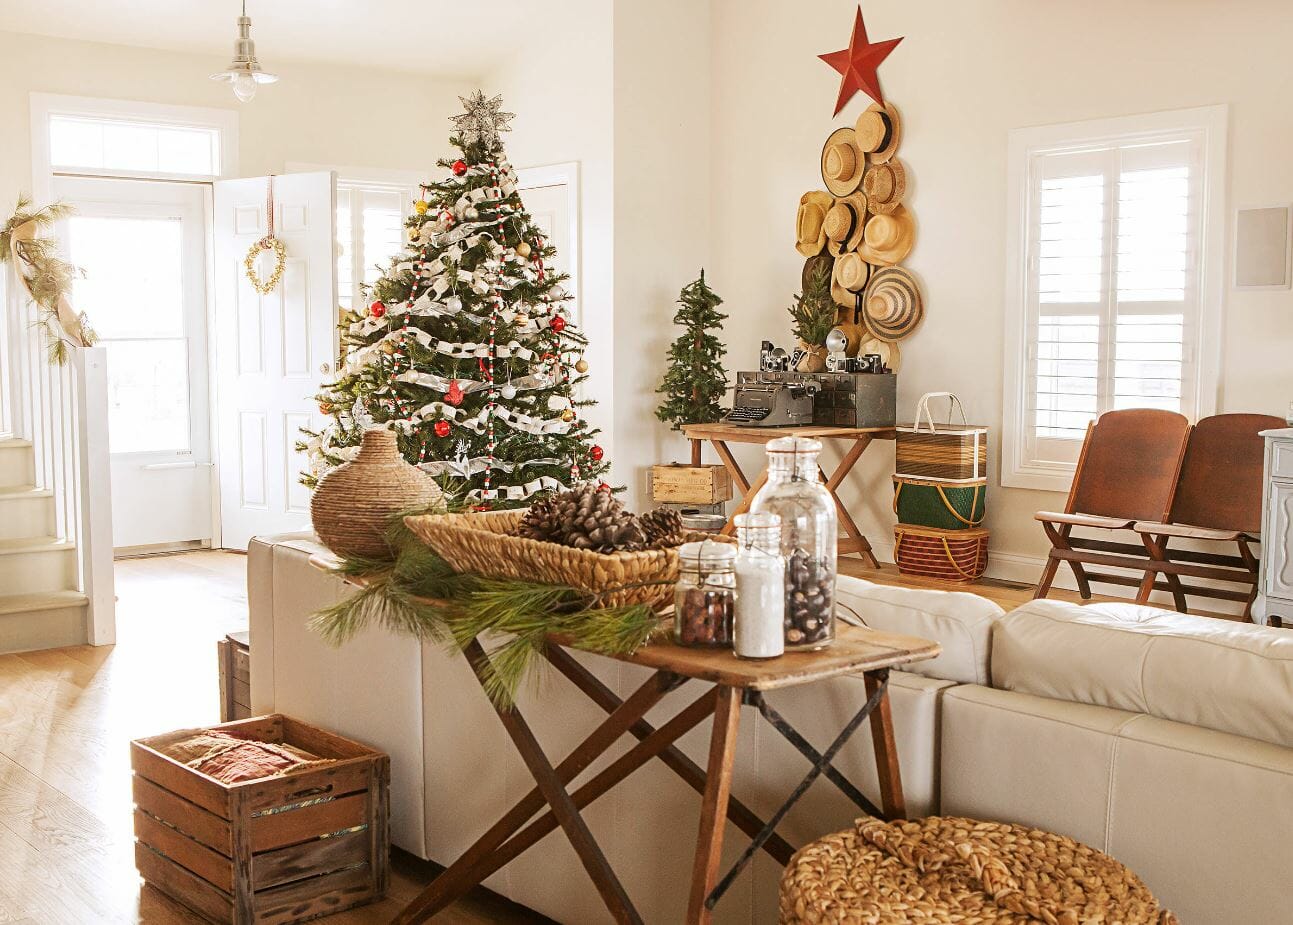 Top 10 Holiday Home Decor Trends - Decorilla Online Interior Design